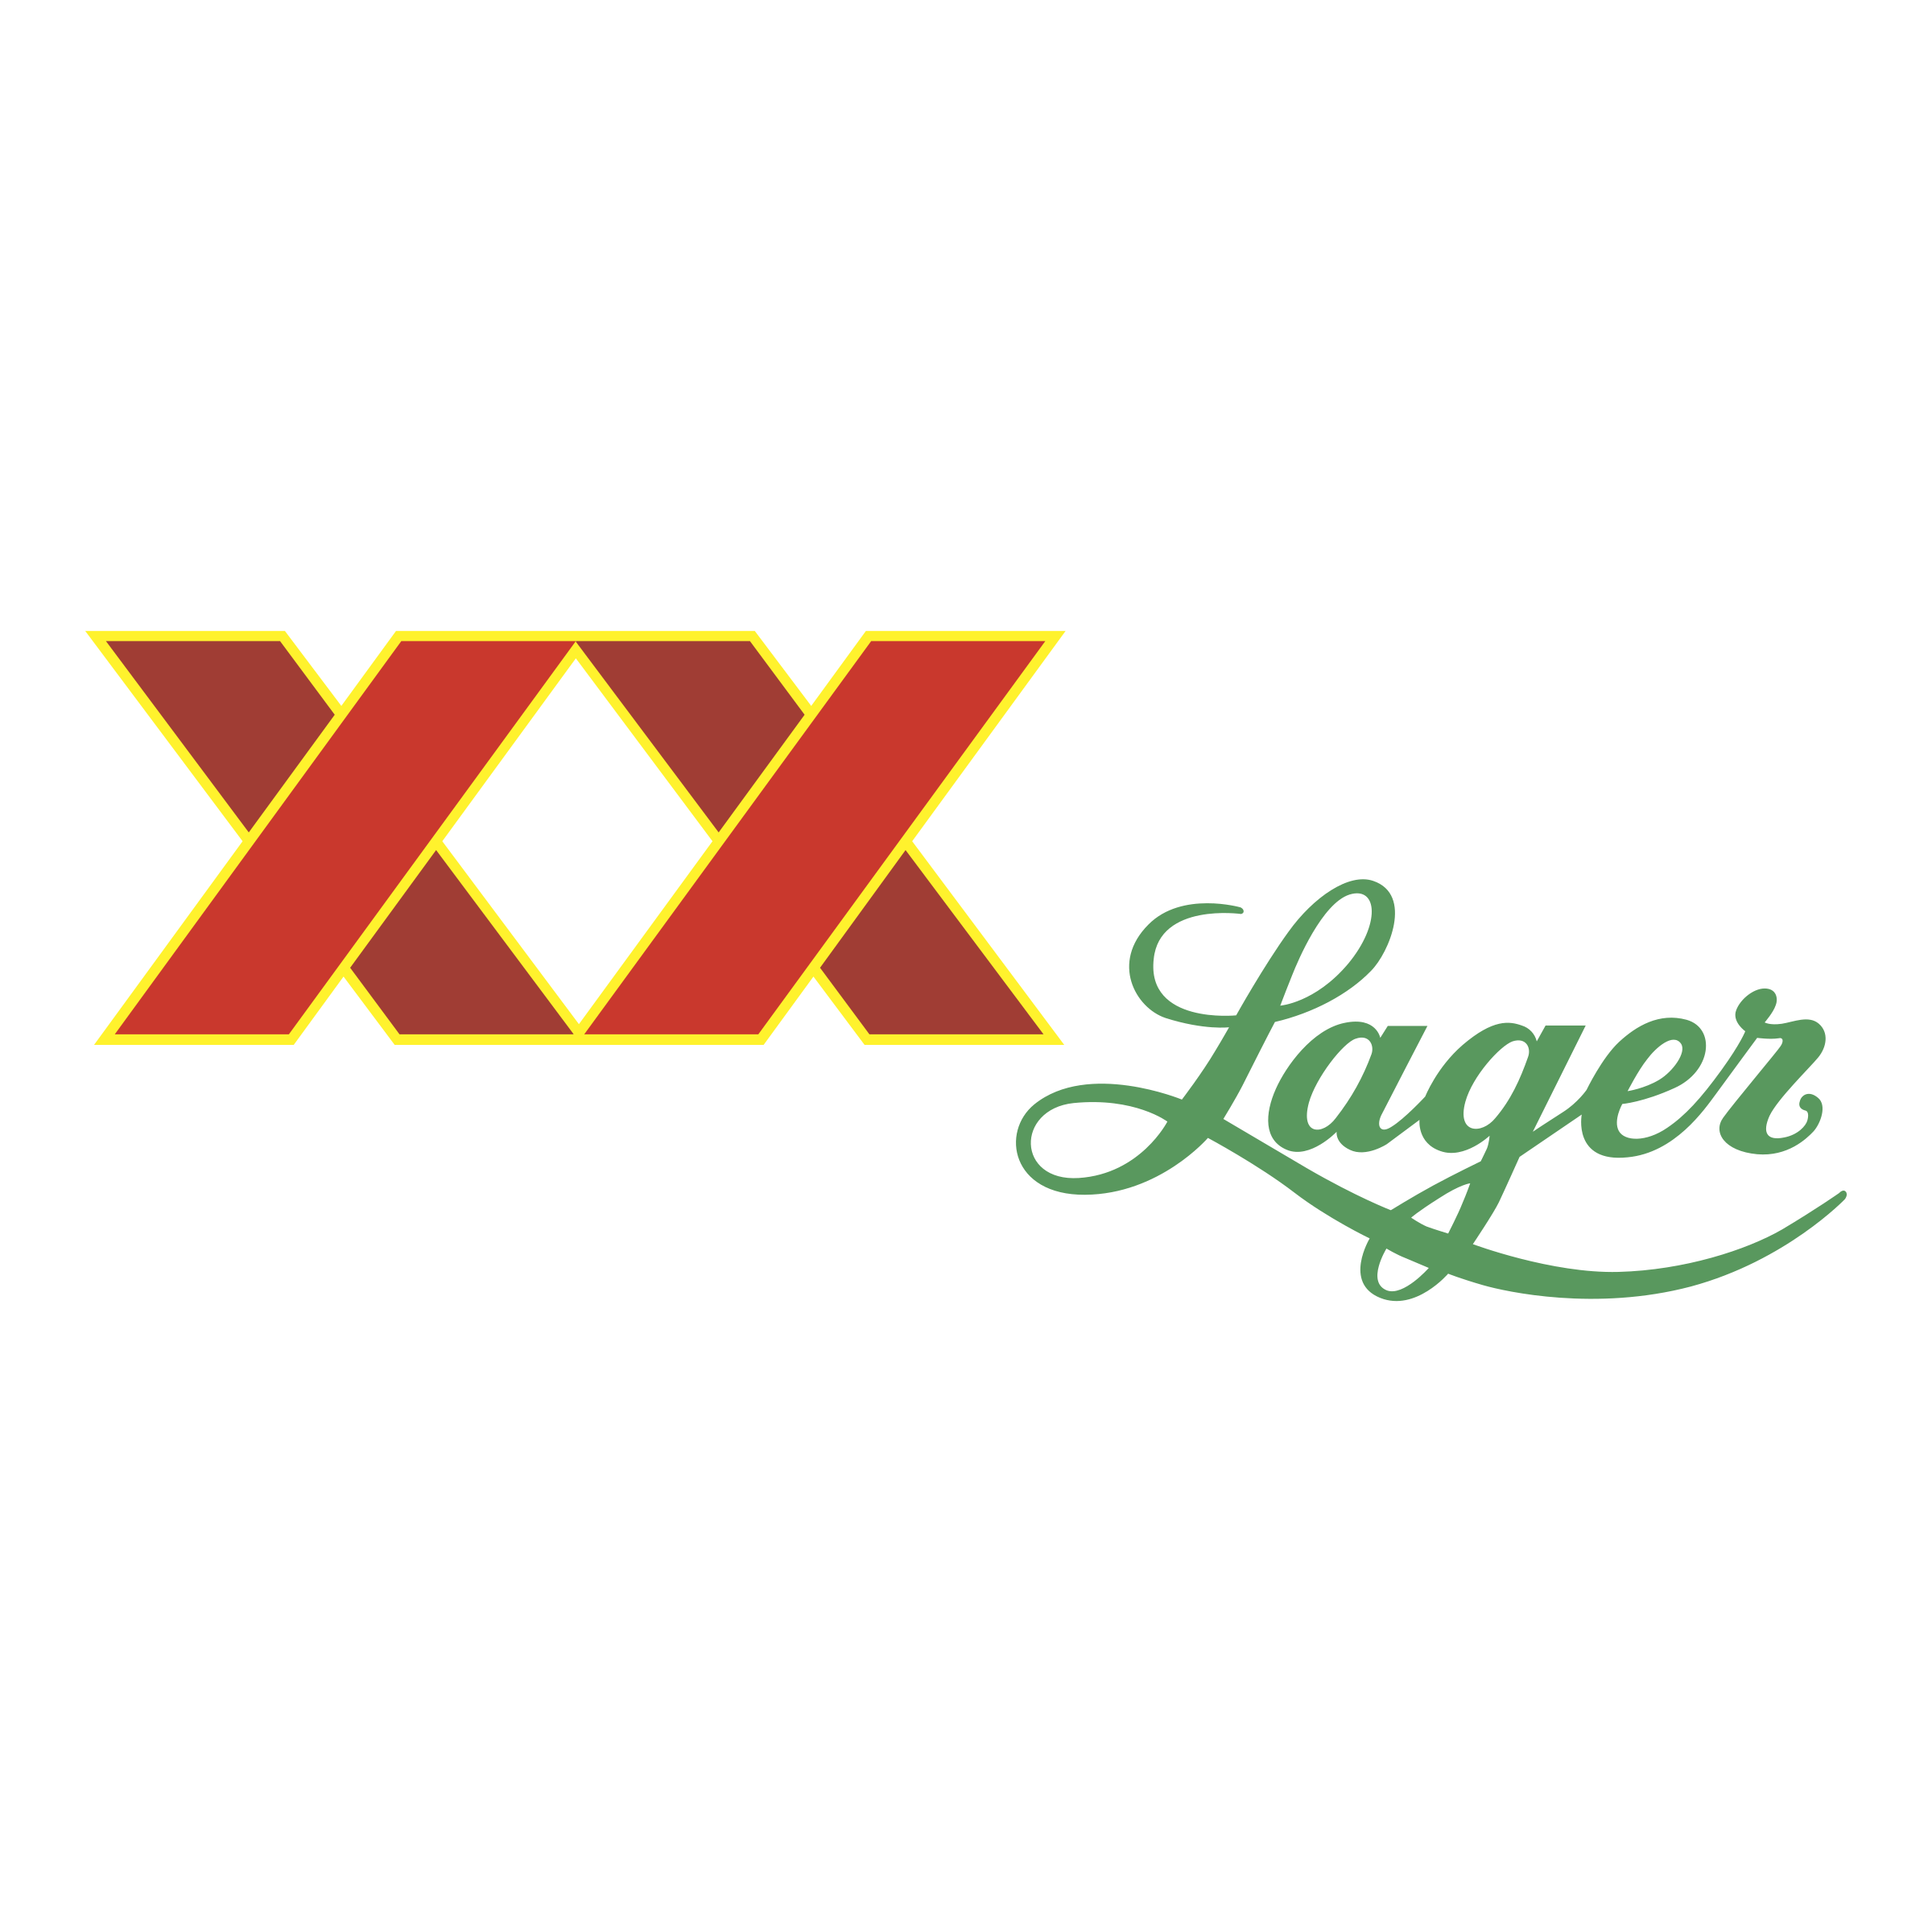 Lager Logo - XX Lager Logo PNG Transparent & SVG Vector - Freebie Supply